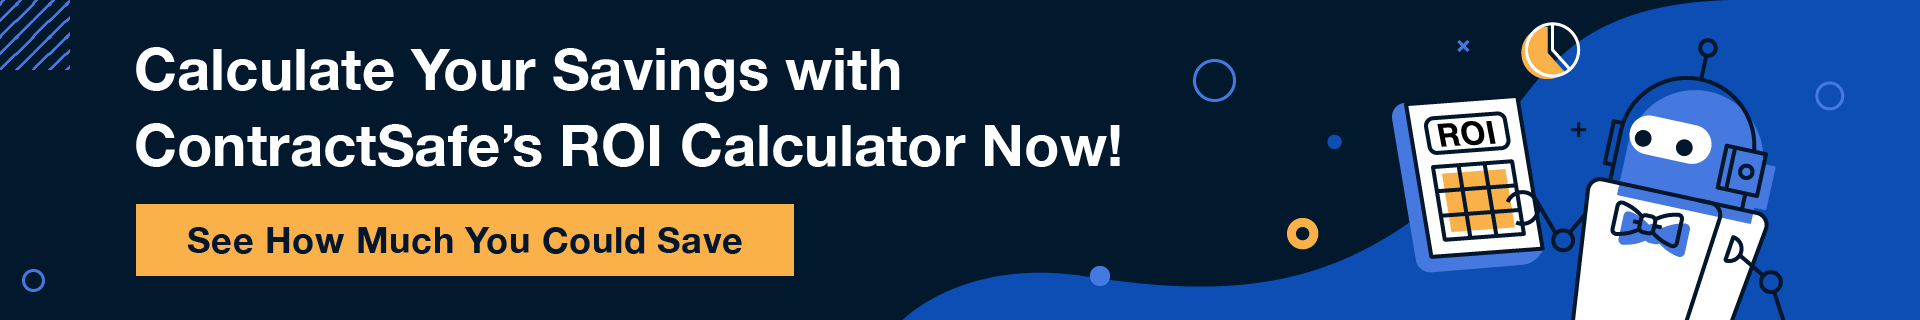 cta-calculate-your-savings-with-roi-calculator